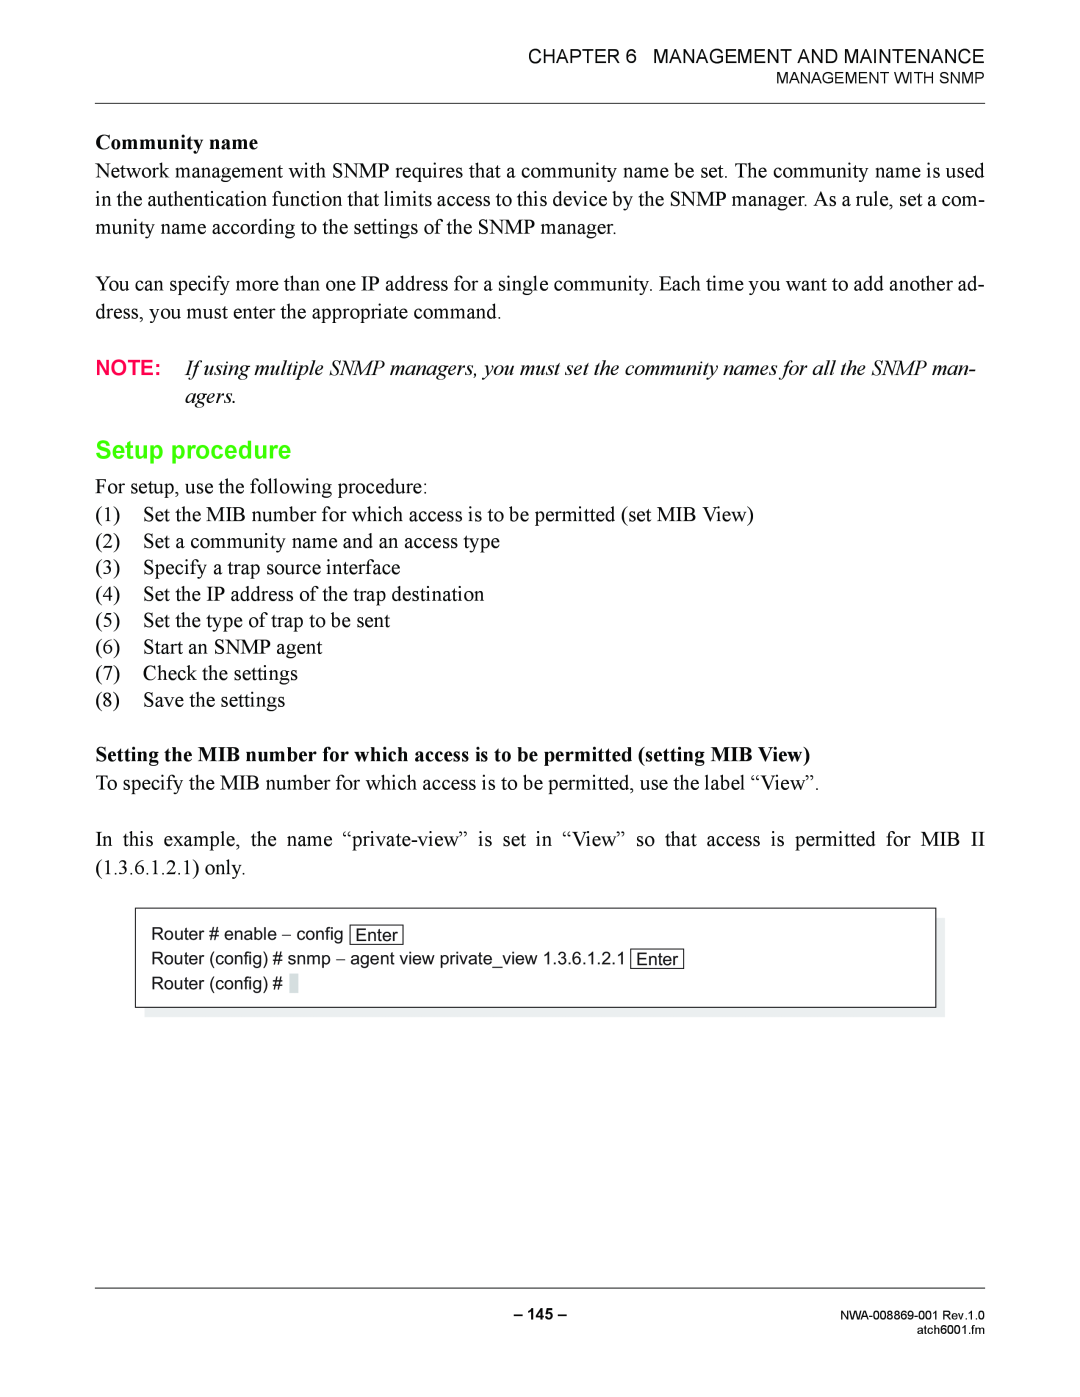 NEC NWA-008869-001 manual Community name, Setup procedure 